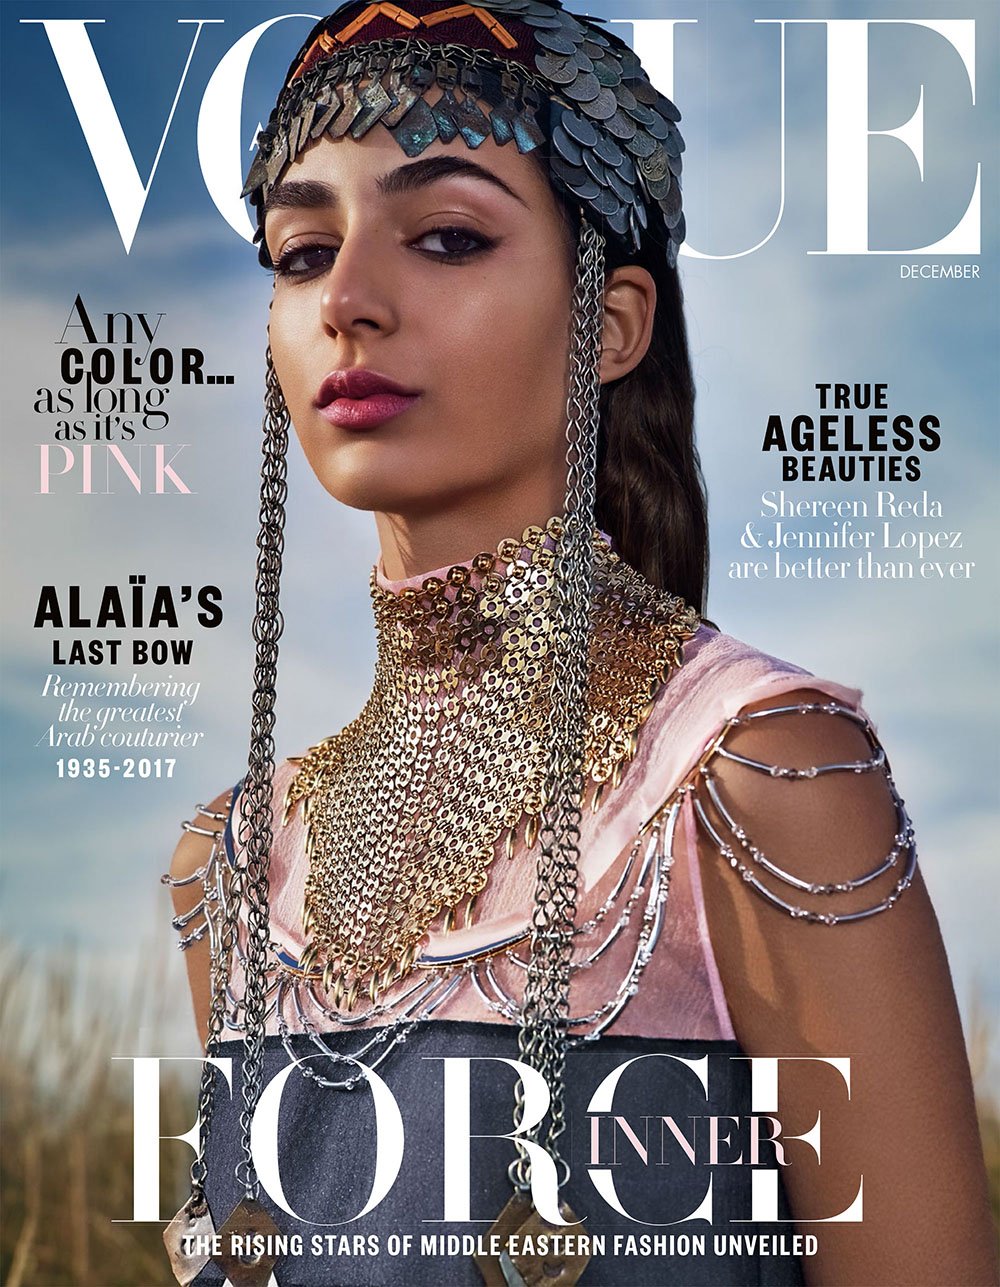 10-Vogue-Arabia-DEC-17-Binder-_ellenvonunwerth_-1.jpg